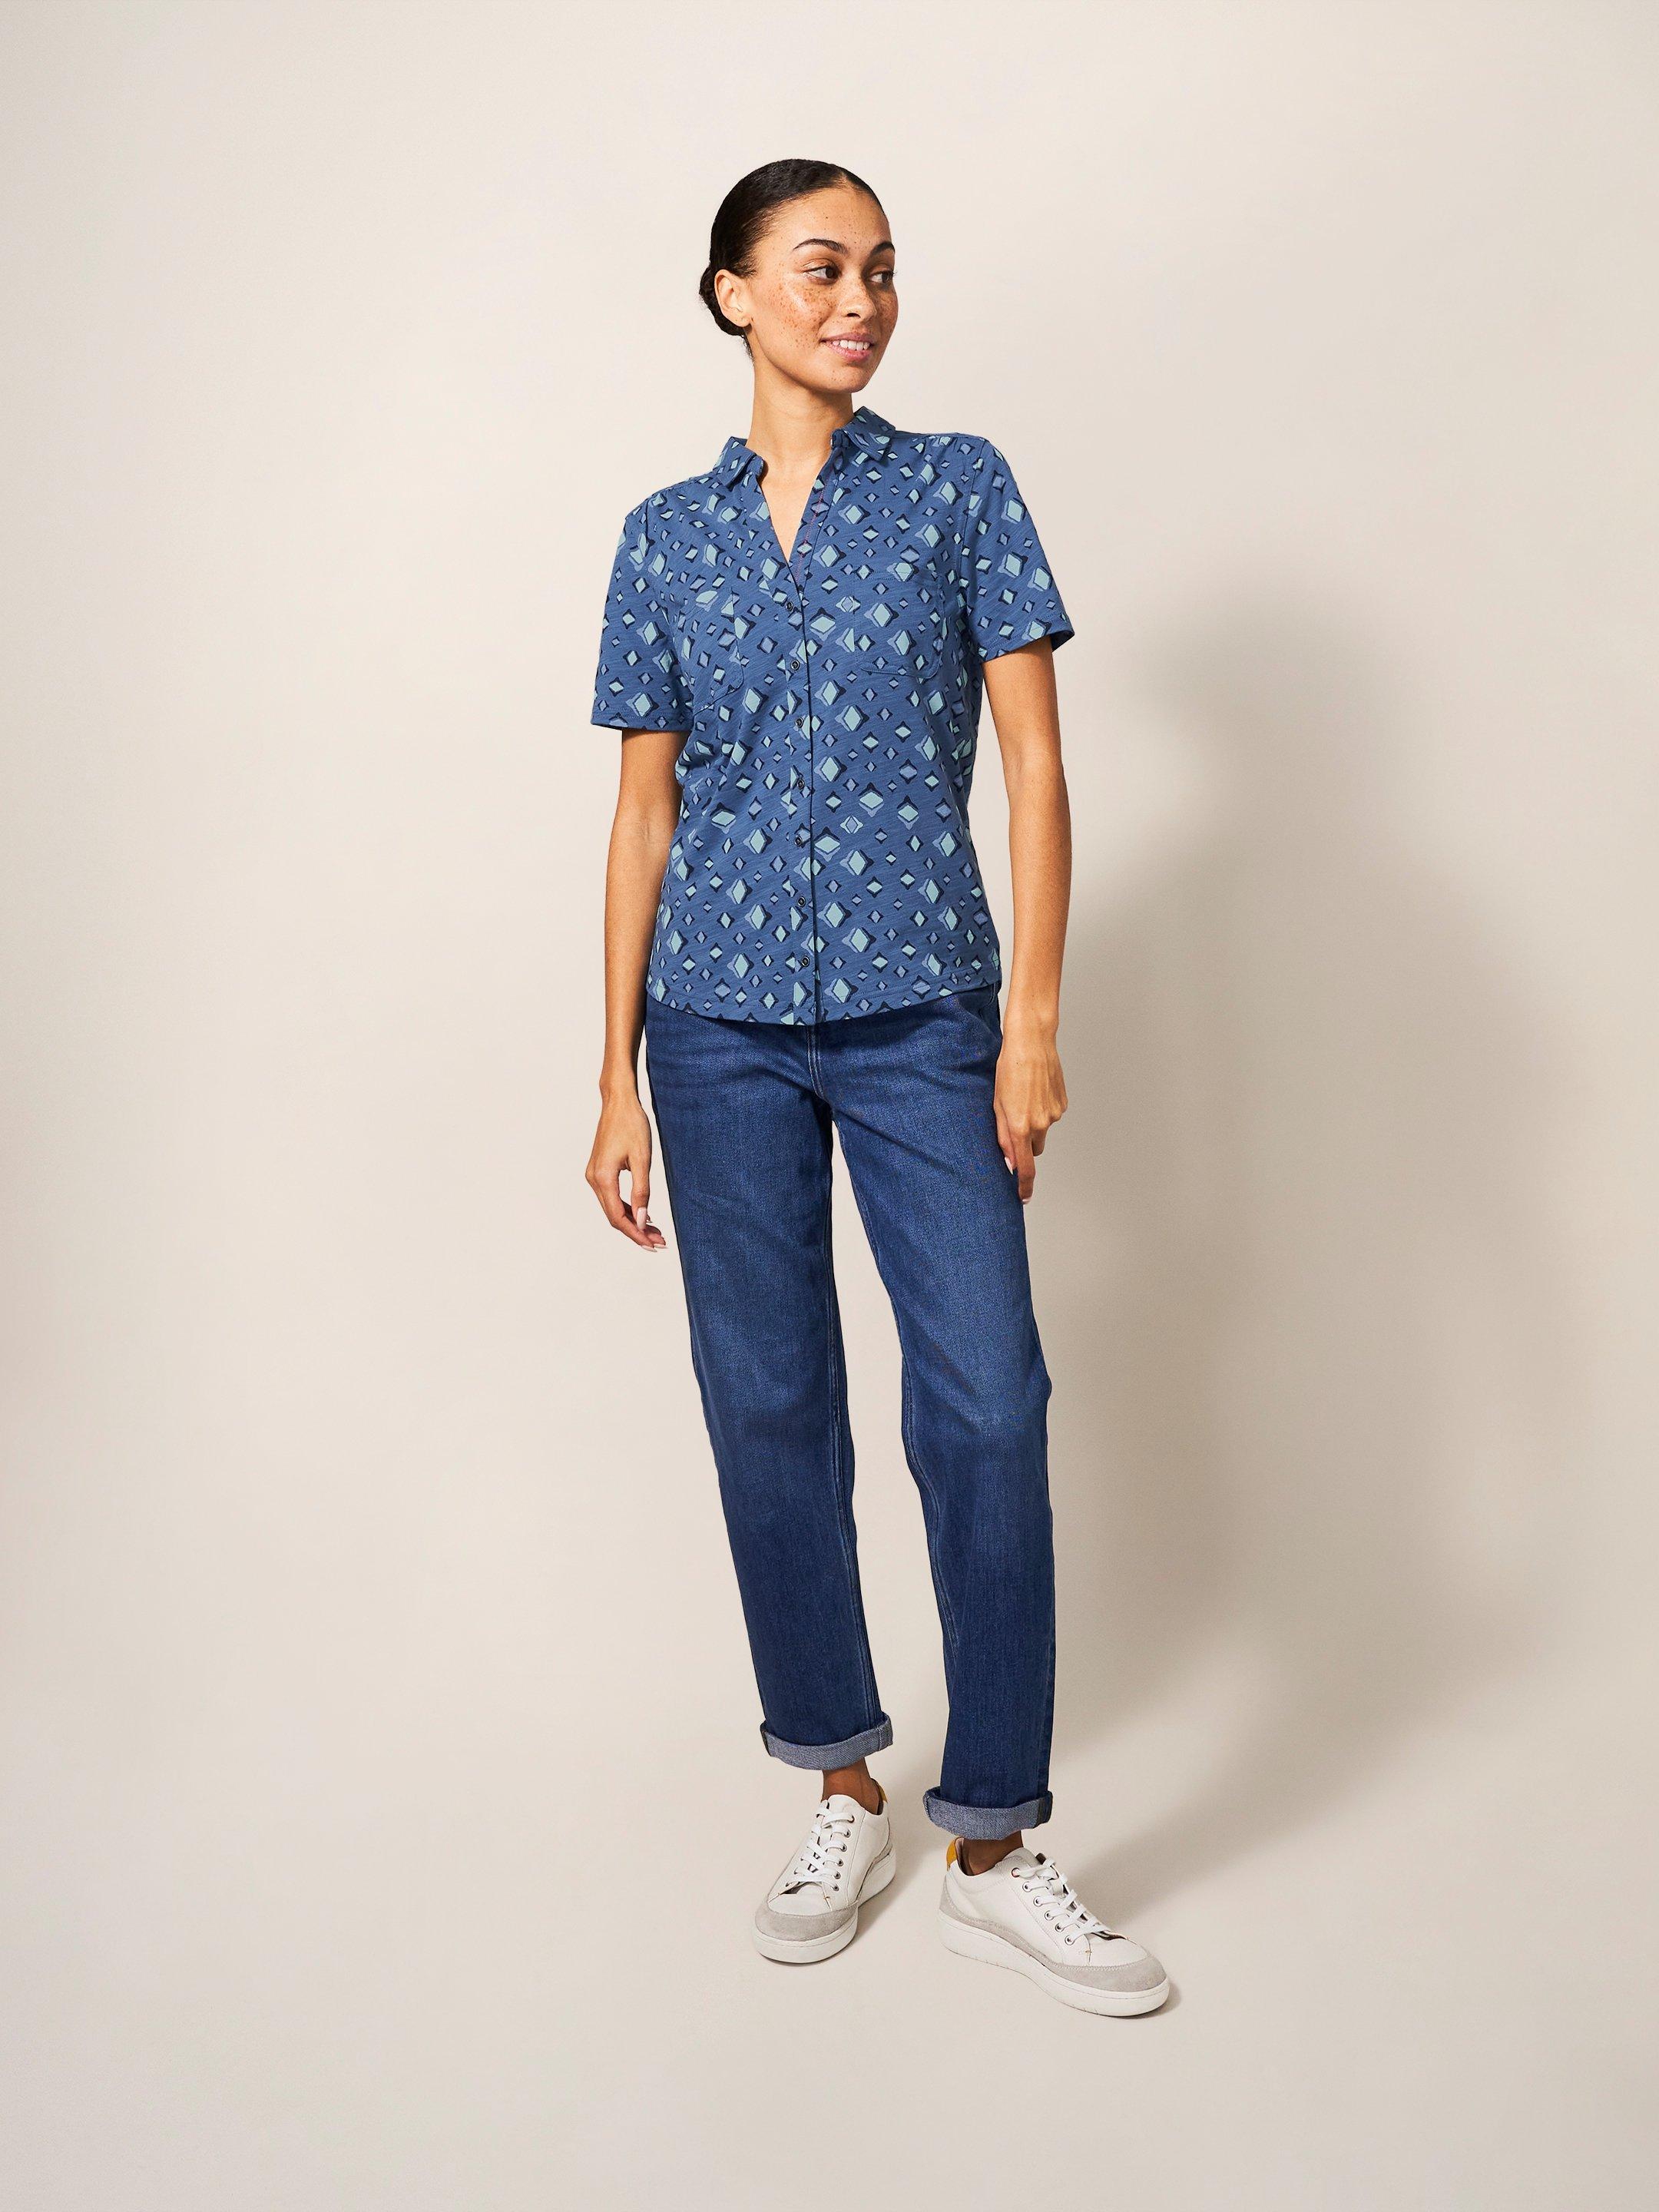 Penny Pocket Cotton Jersey Shirt in BLUE PR - MODEL FRONT